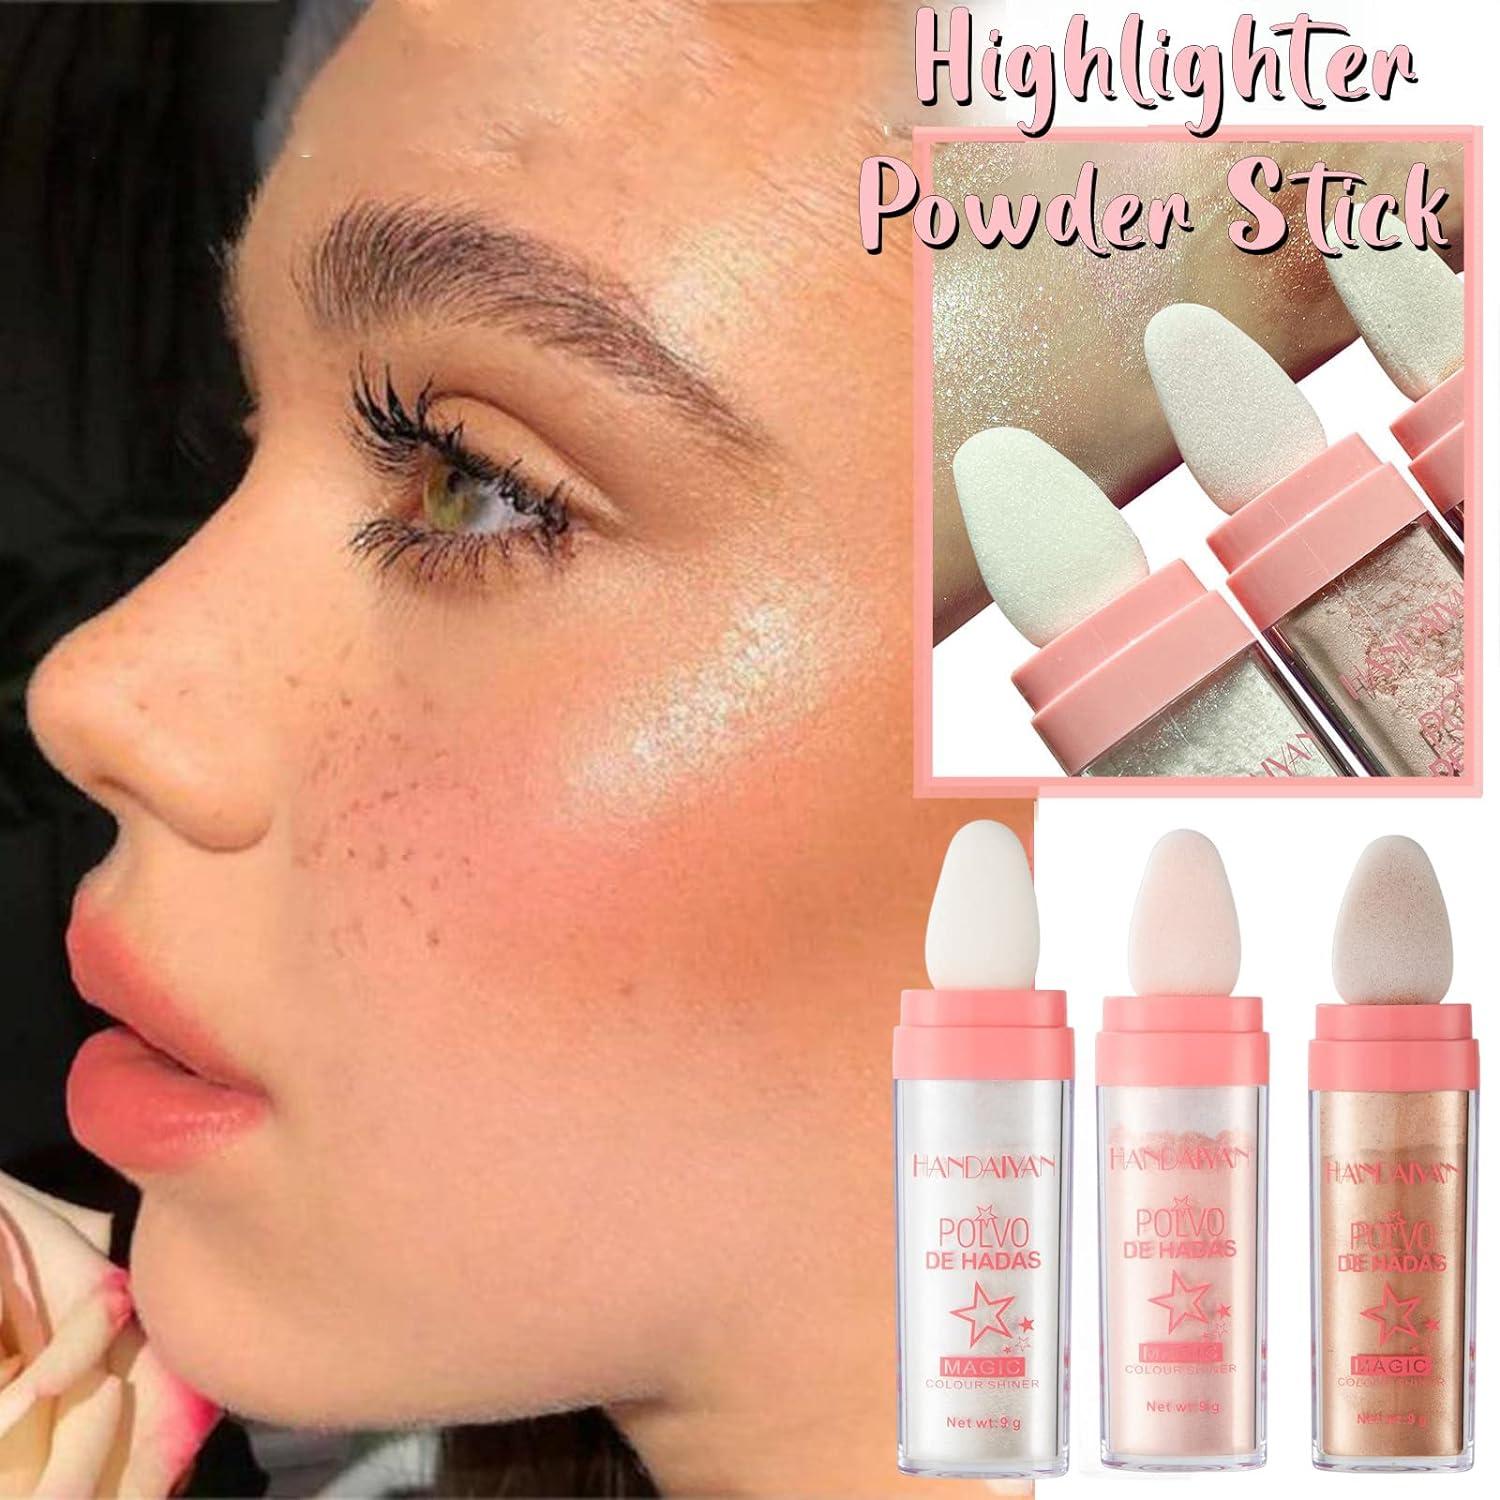 3 Colors Polvo De Hadas Highlighter Makeup Body Glitter Highlighter Powder  Stick Fairy Highlight Patting Powder For Hair Face Eyes Body 3 Pack